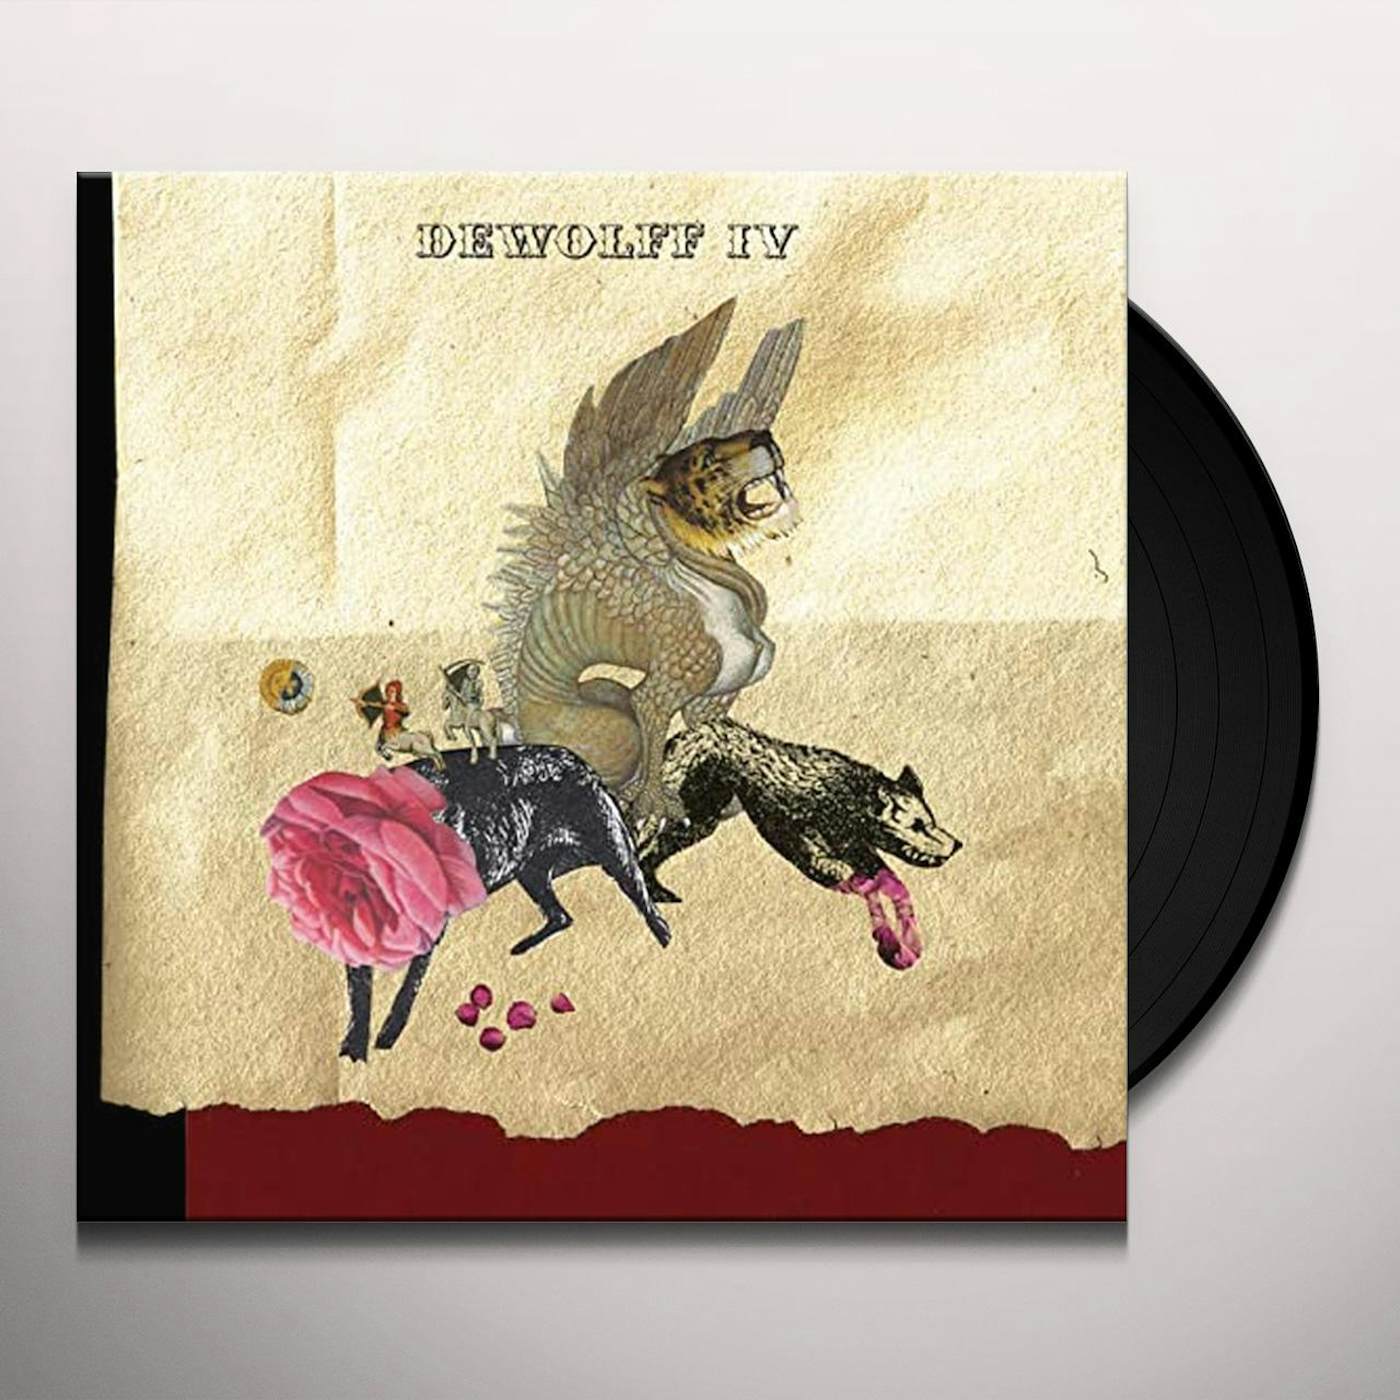 DEWOLFF IV (GER) Vinyl Record